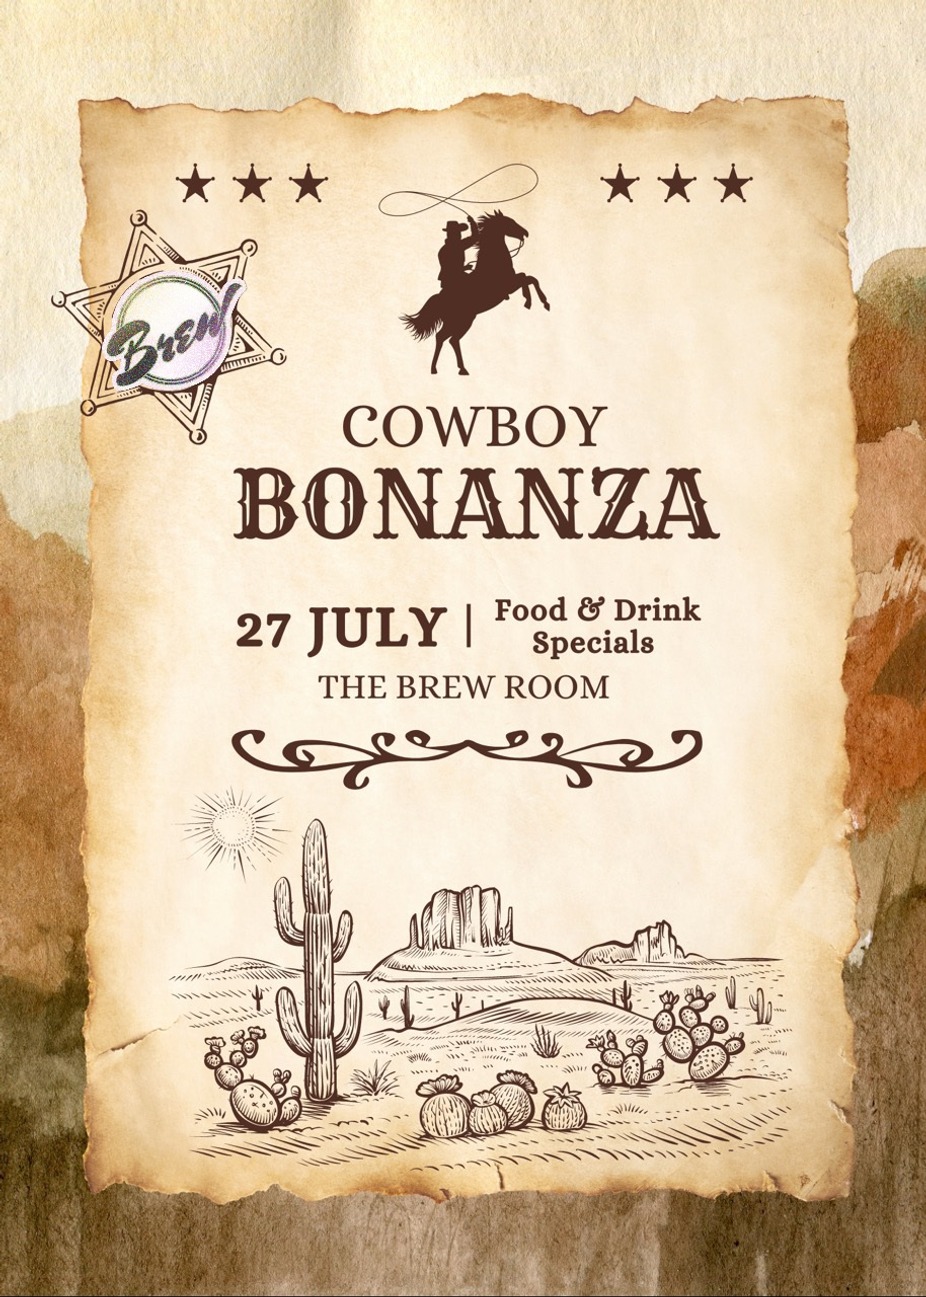 Cowboy Bonanza event photo